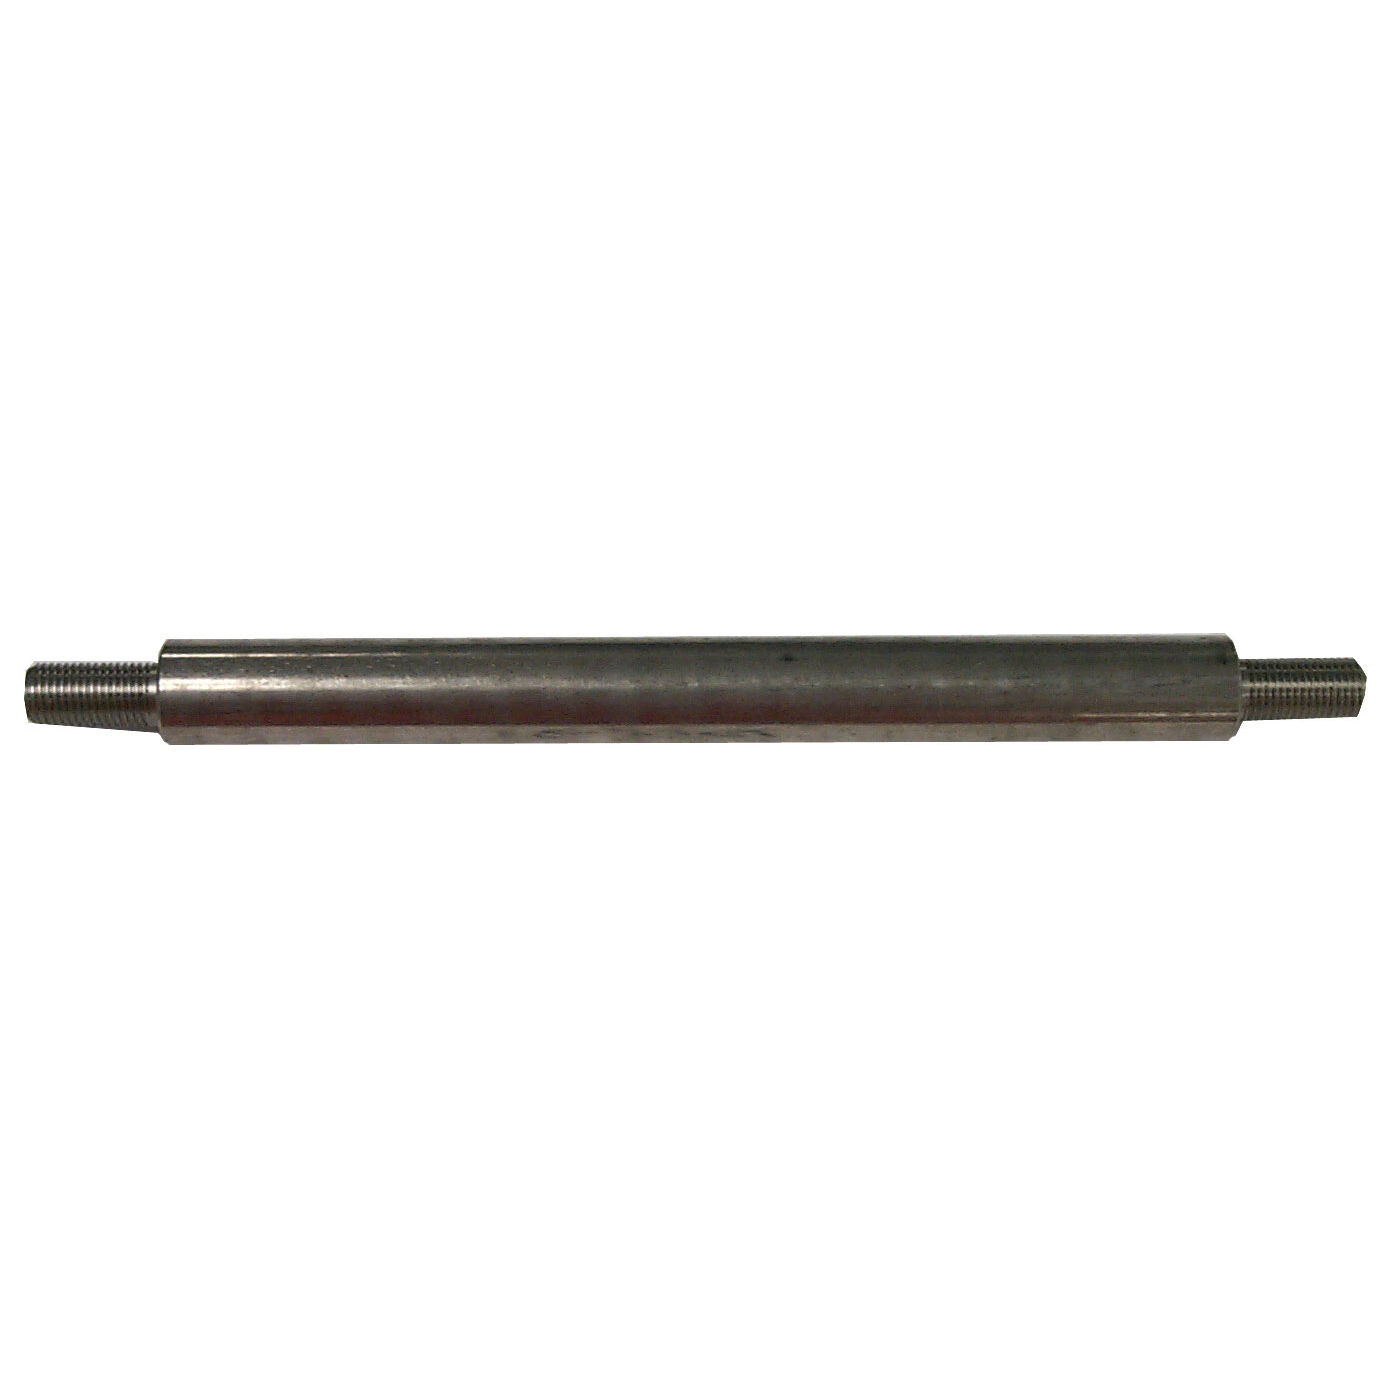 Sierra Pivot Pin 7-1/2 For Mercury Marine Engine, Part #18-2151